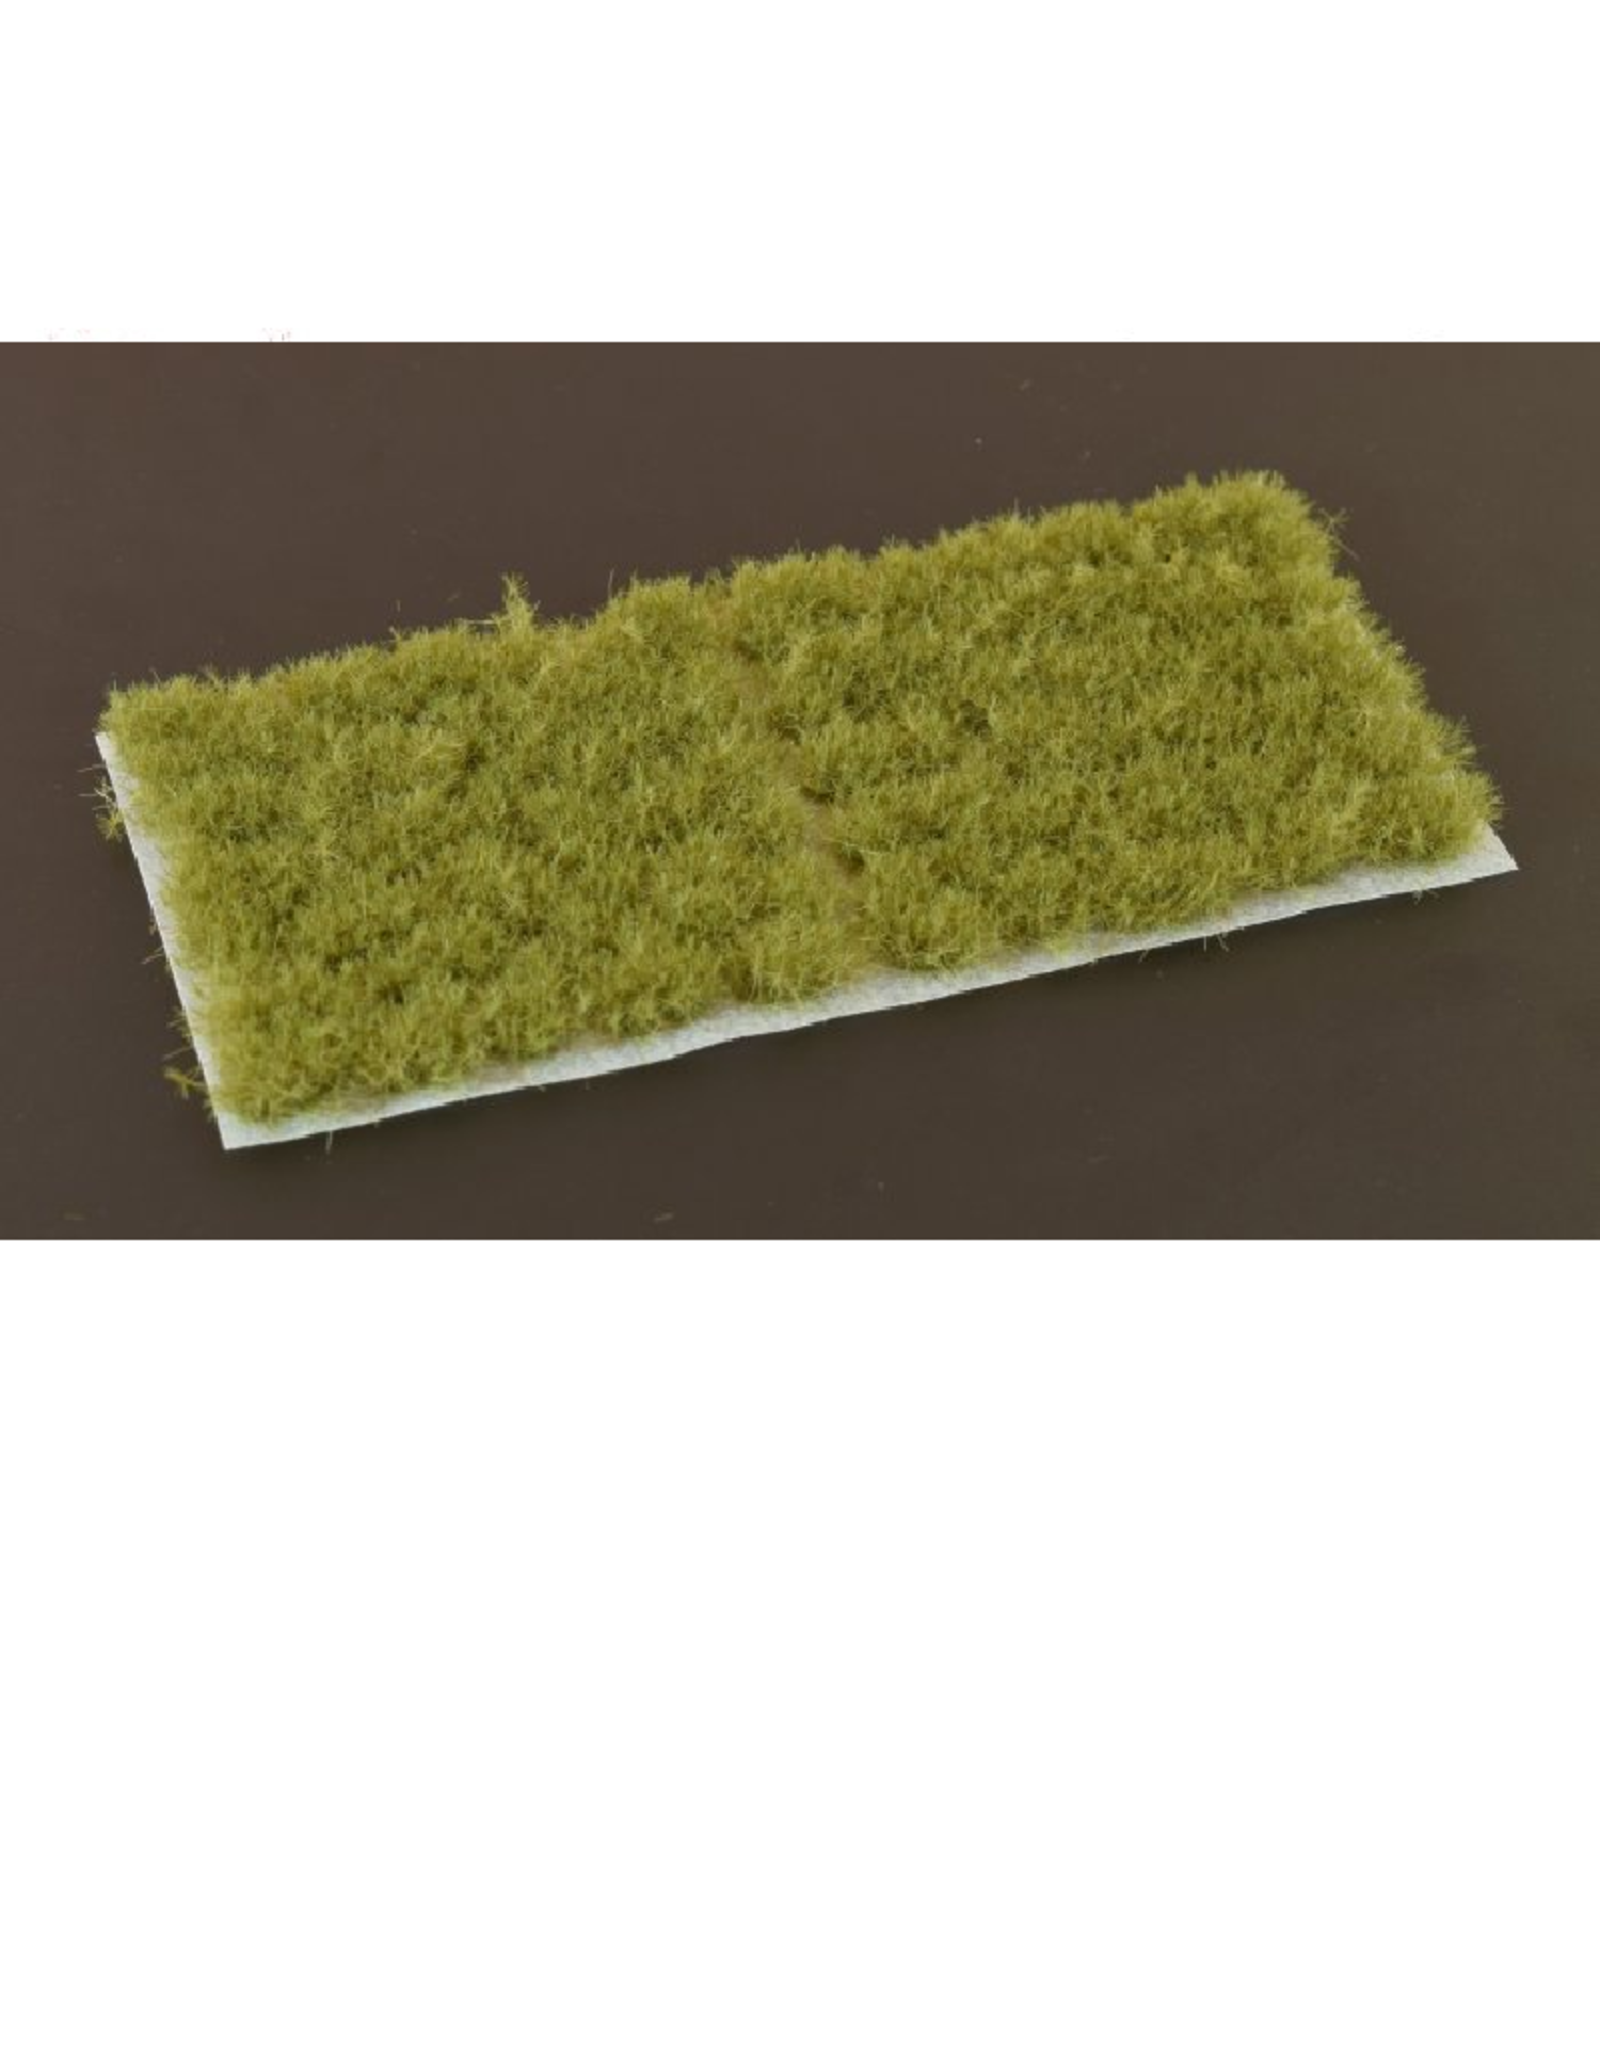 Gamers' Grass Dense Green tufts (6mm)